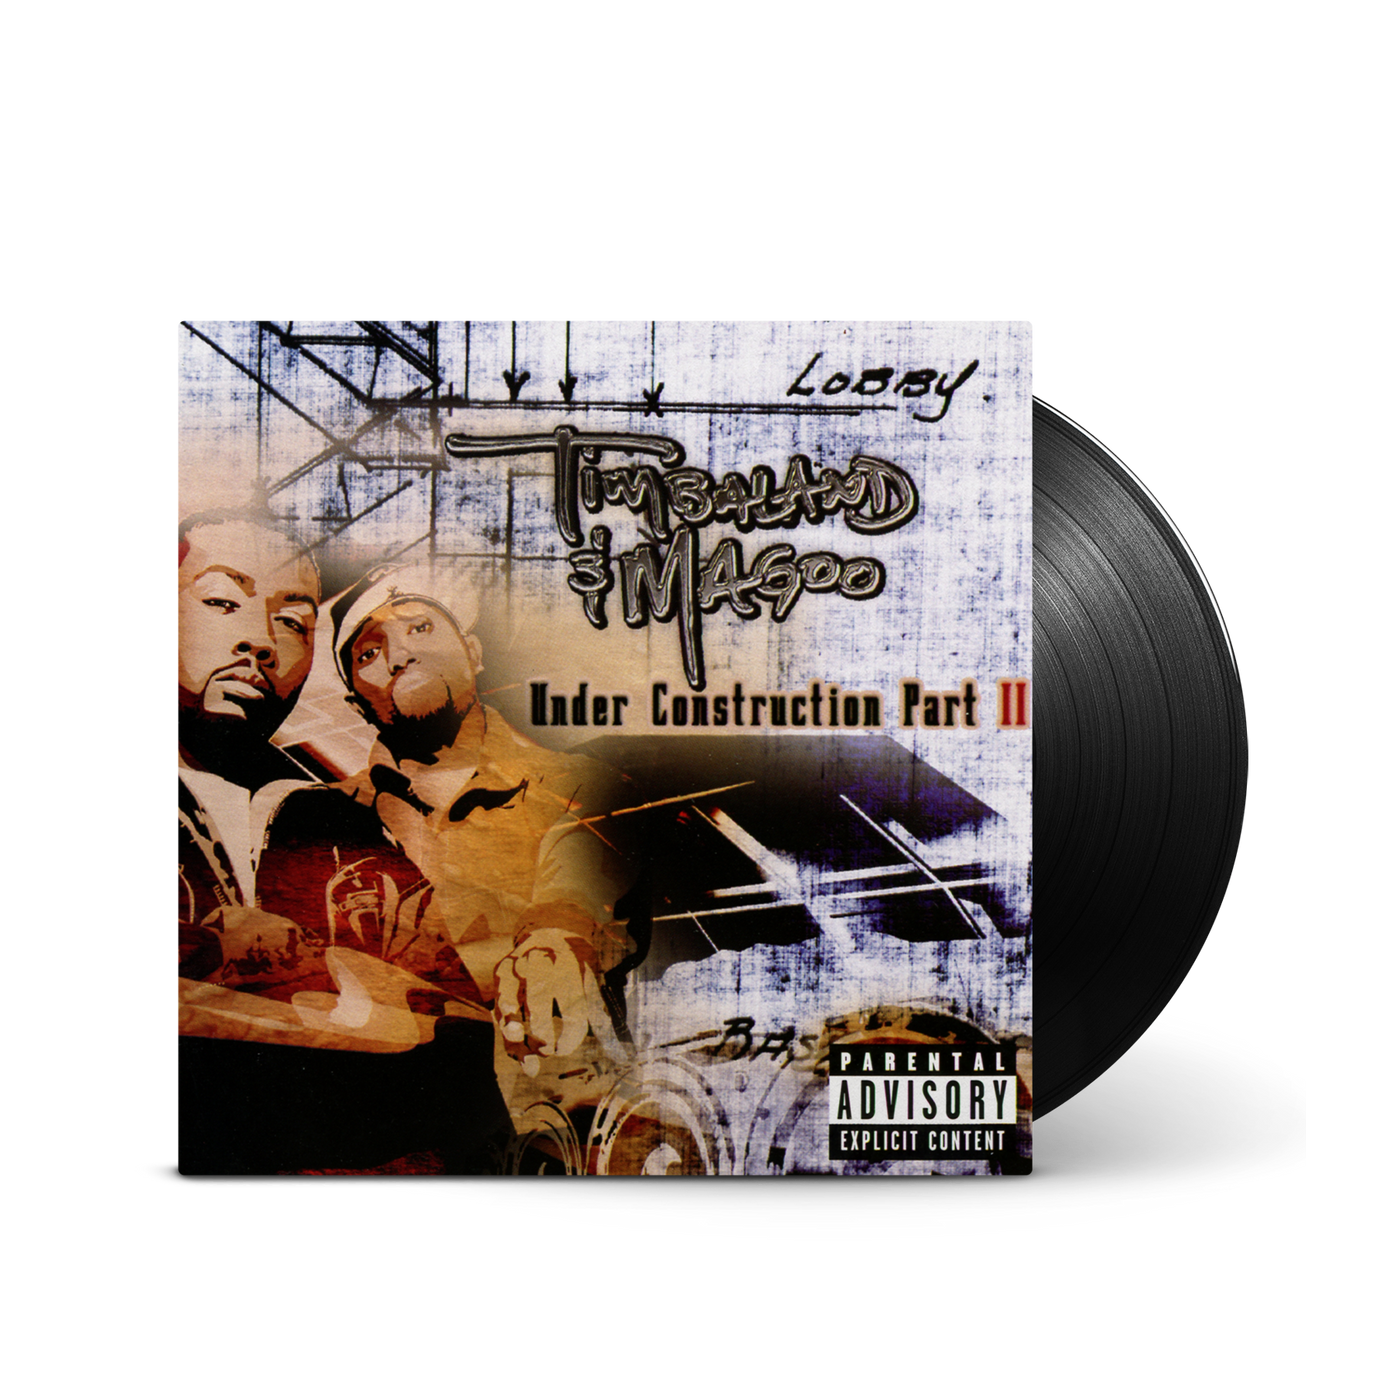 Timbaland & Magoo - Under Construction II Vinyl